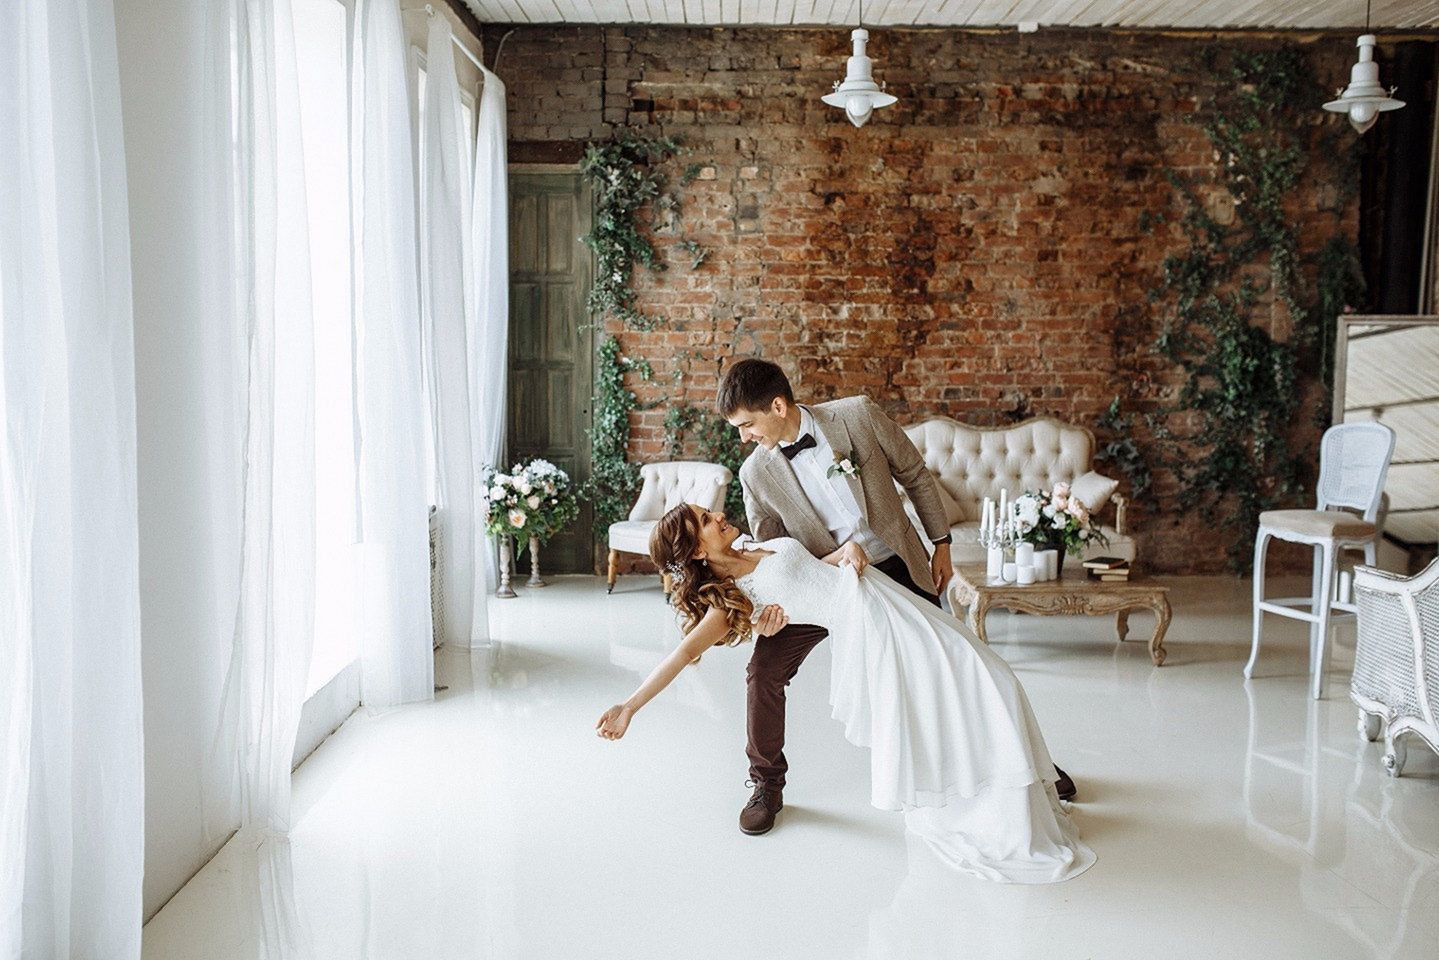 Wedding proposal in indoor from weddywood.ru